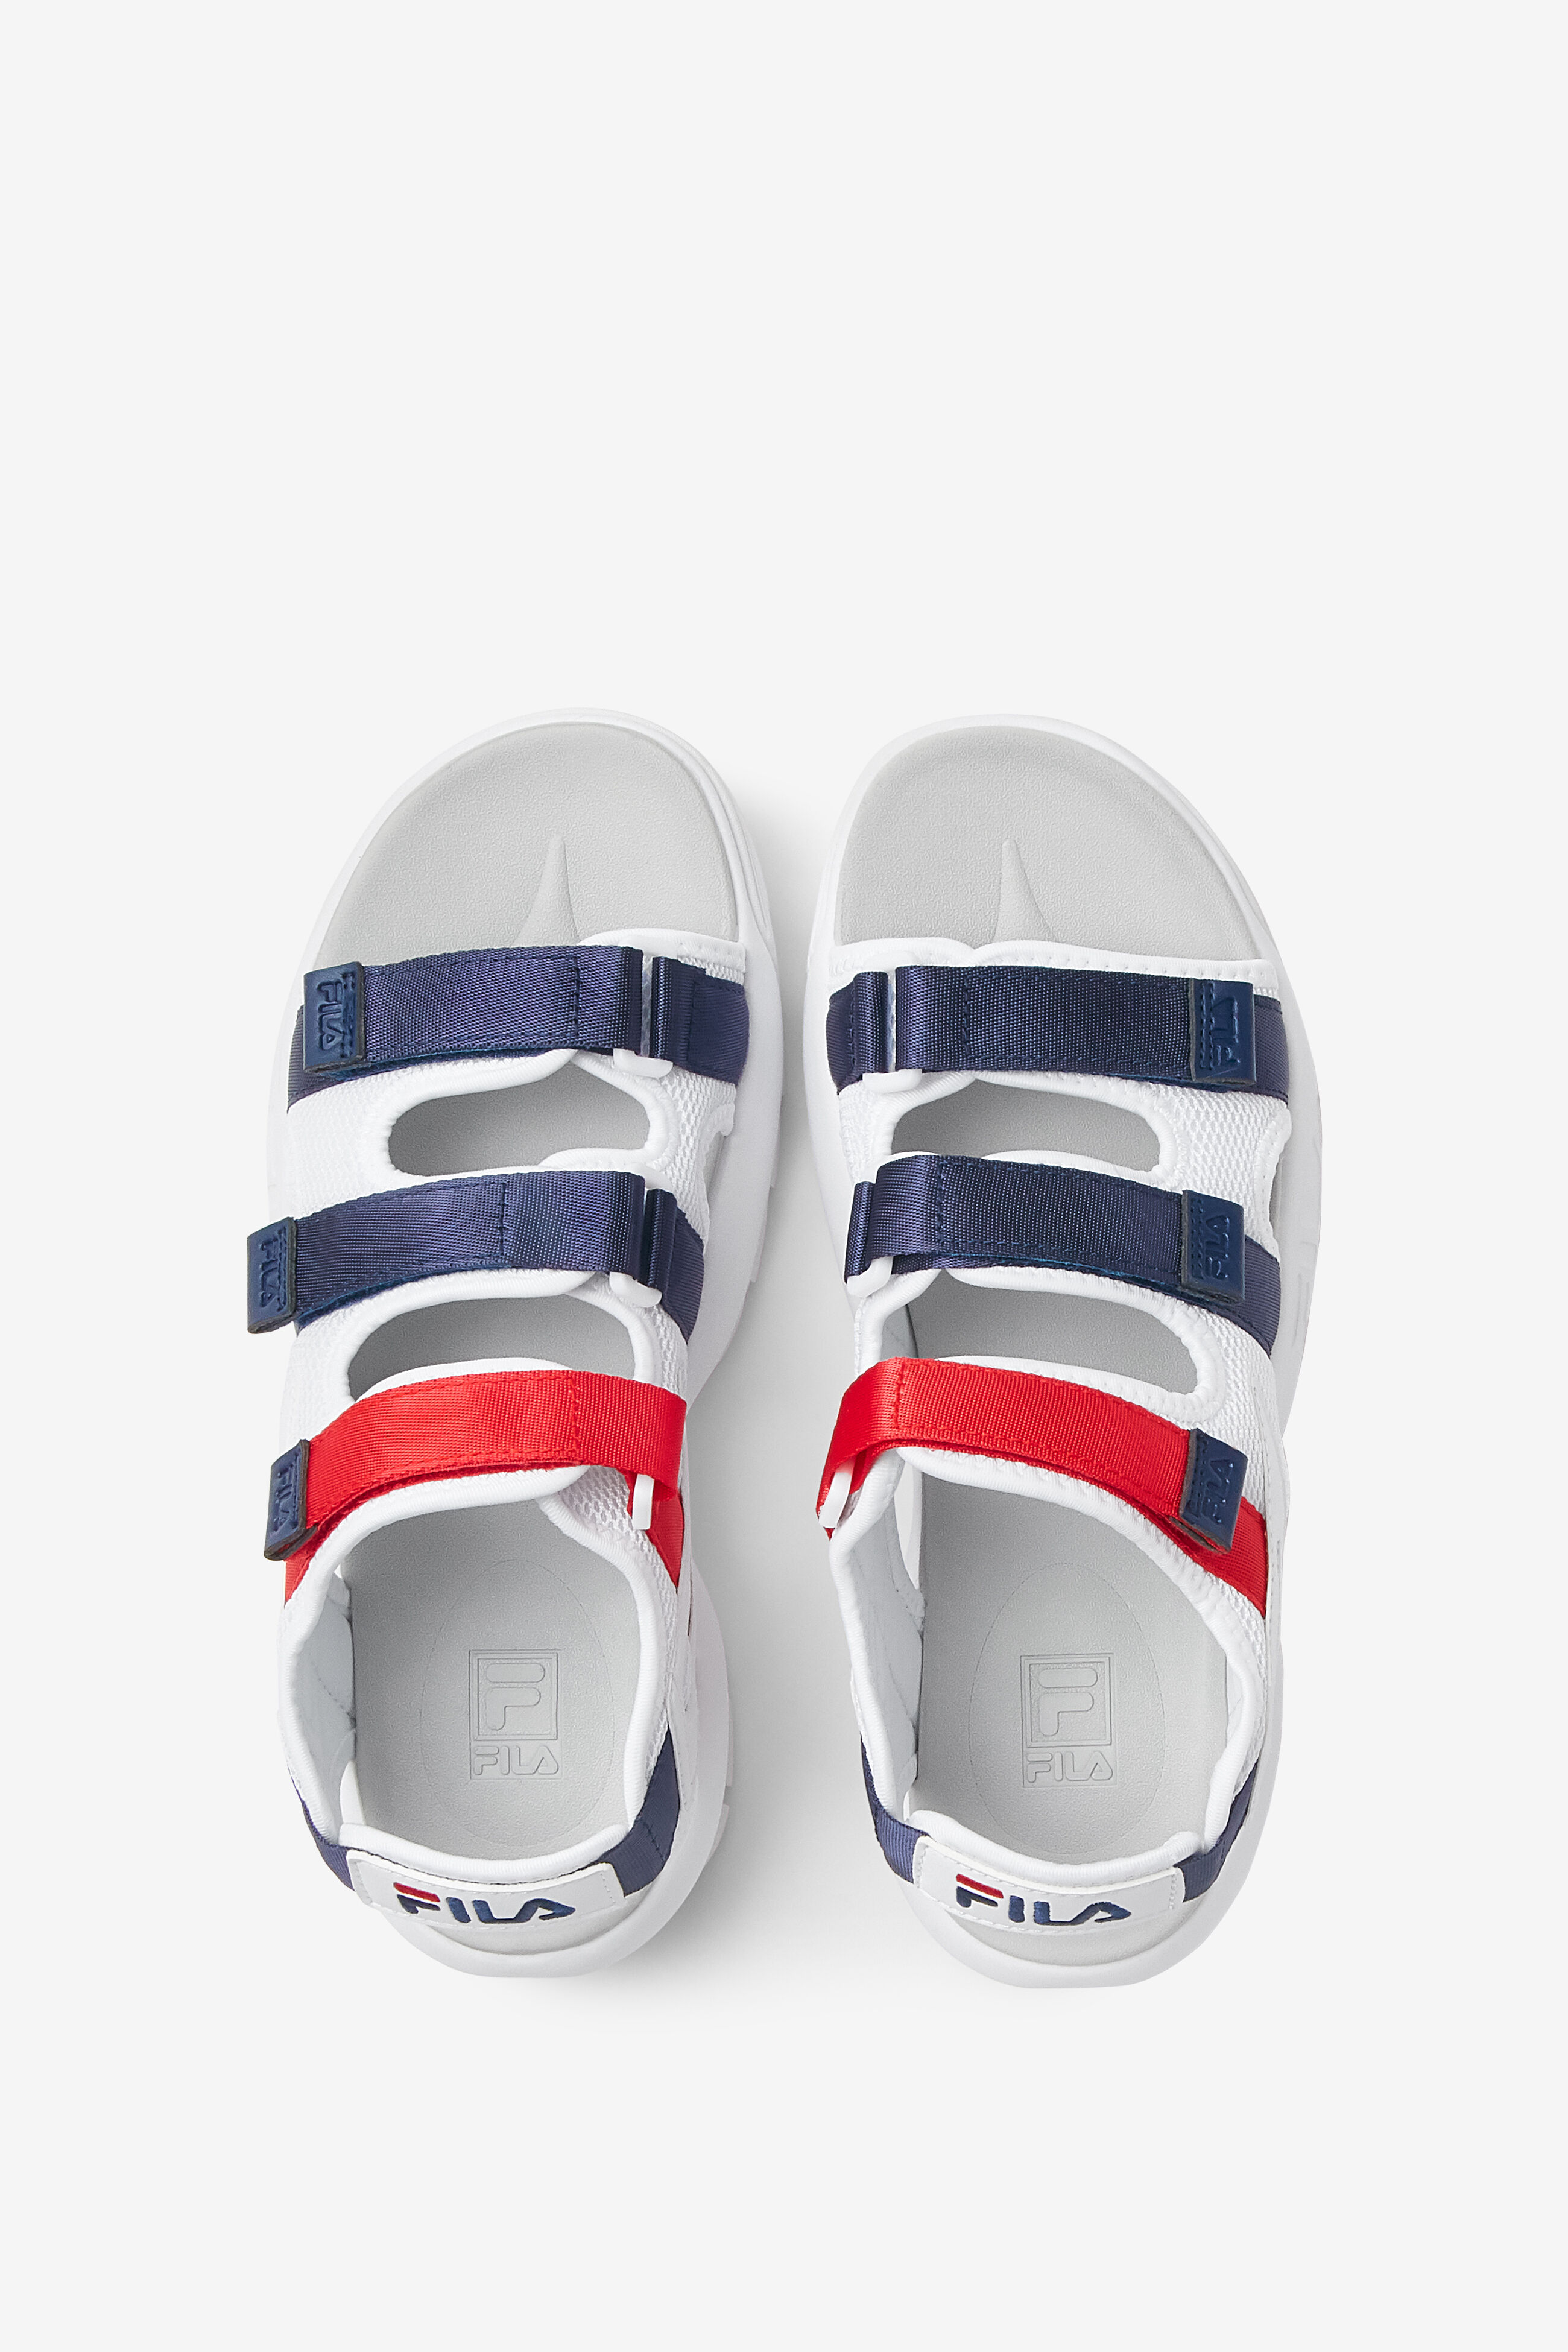 FILA Disruptor sandal Size: 8.5 Open to offers... - Depop